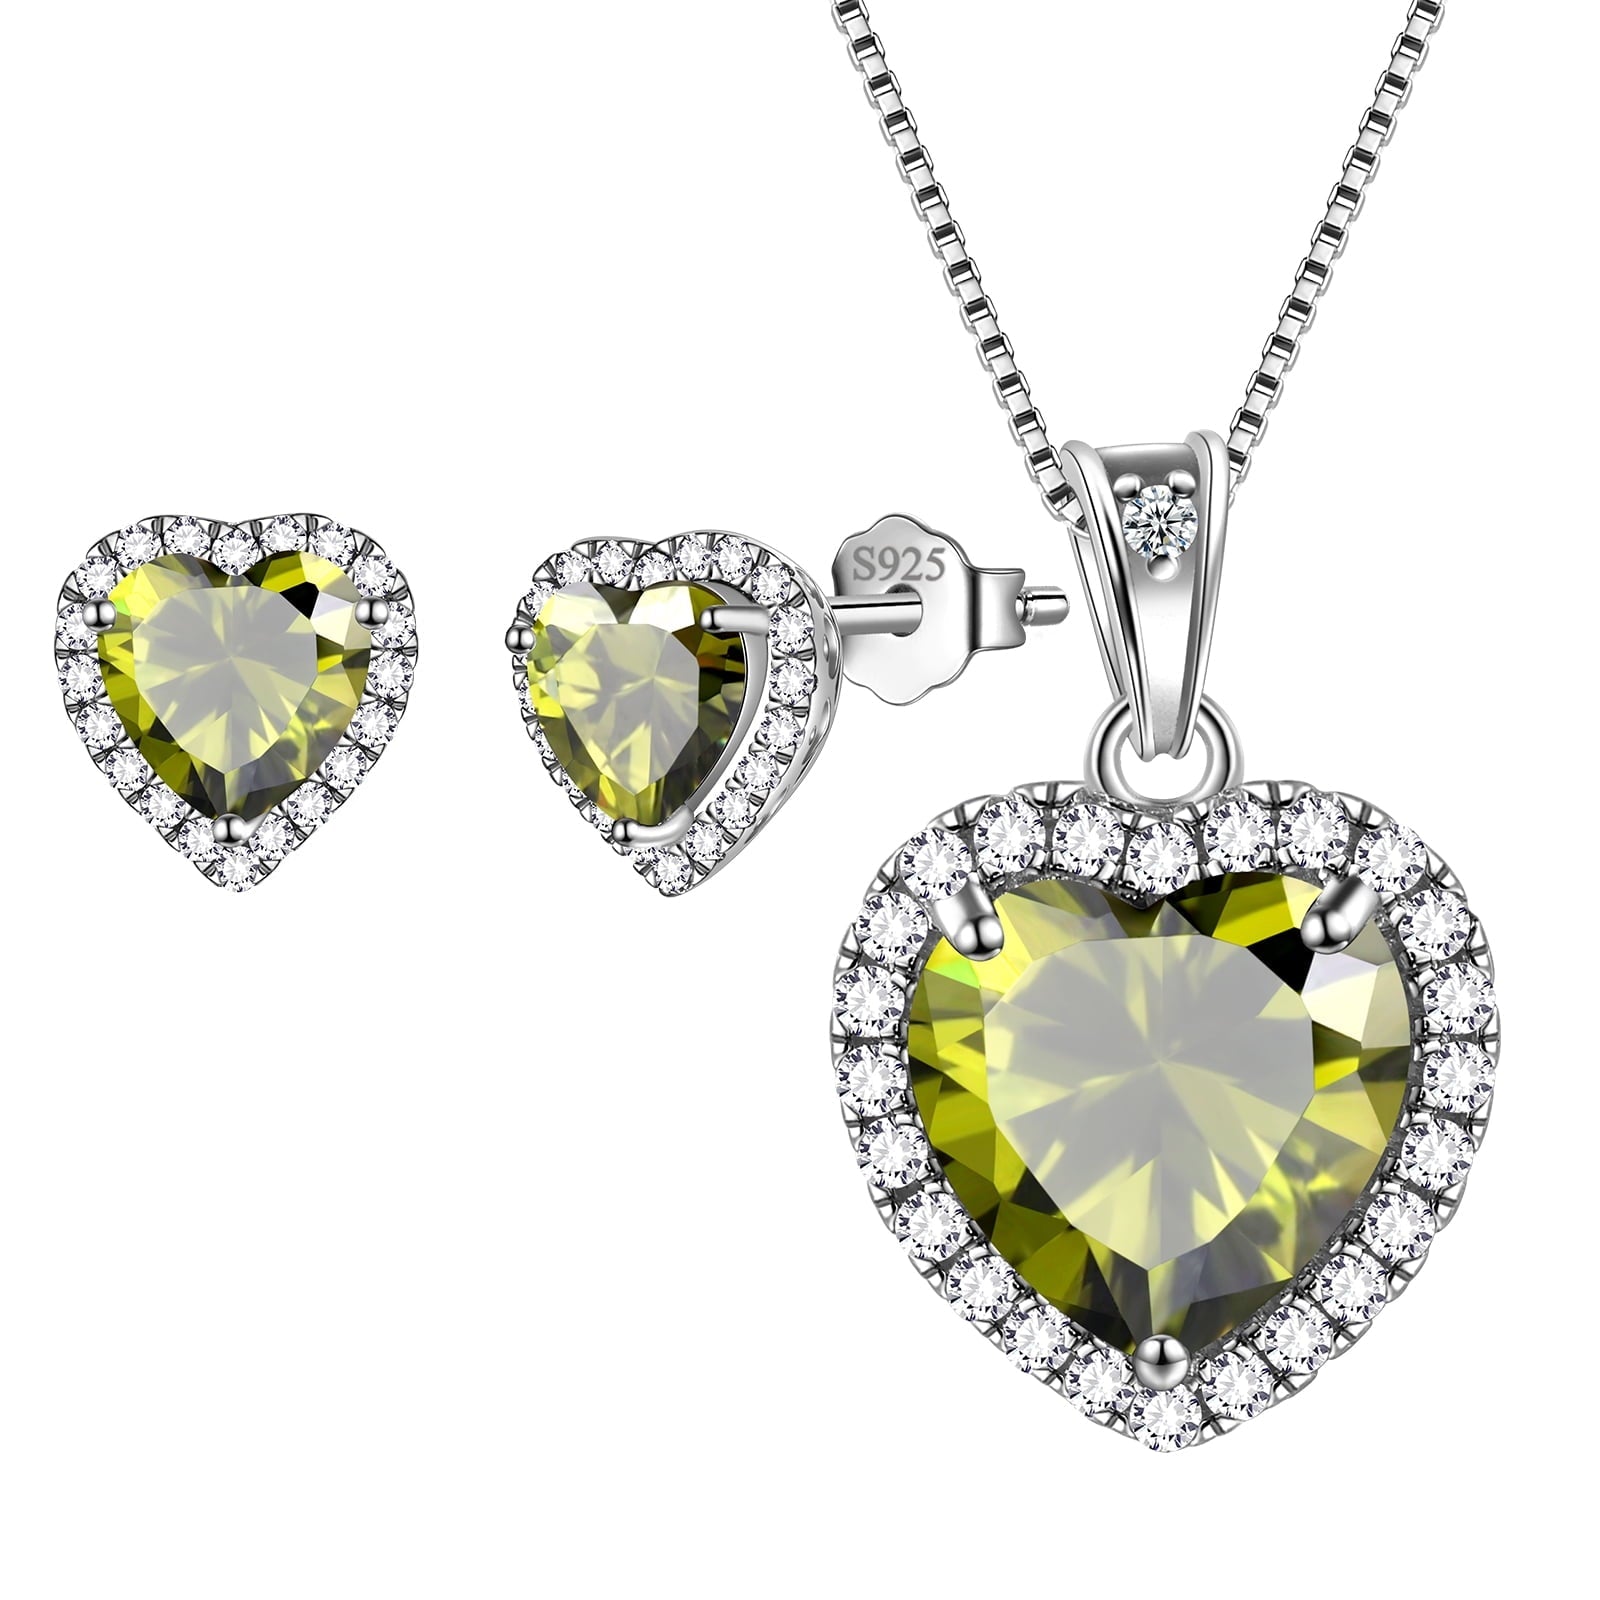 Hearts Jewelry Sets 3PCS 925 Sterling Silver Birthstone Necklace Earrings for Women Girls - Aurora Tears Jewelry